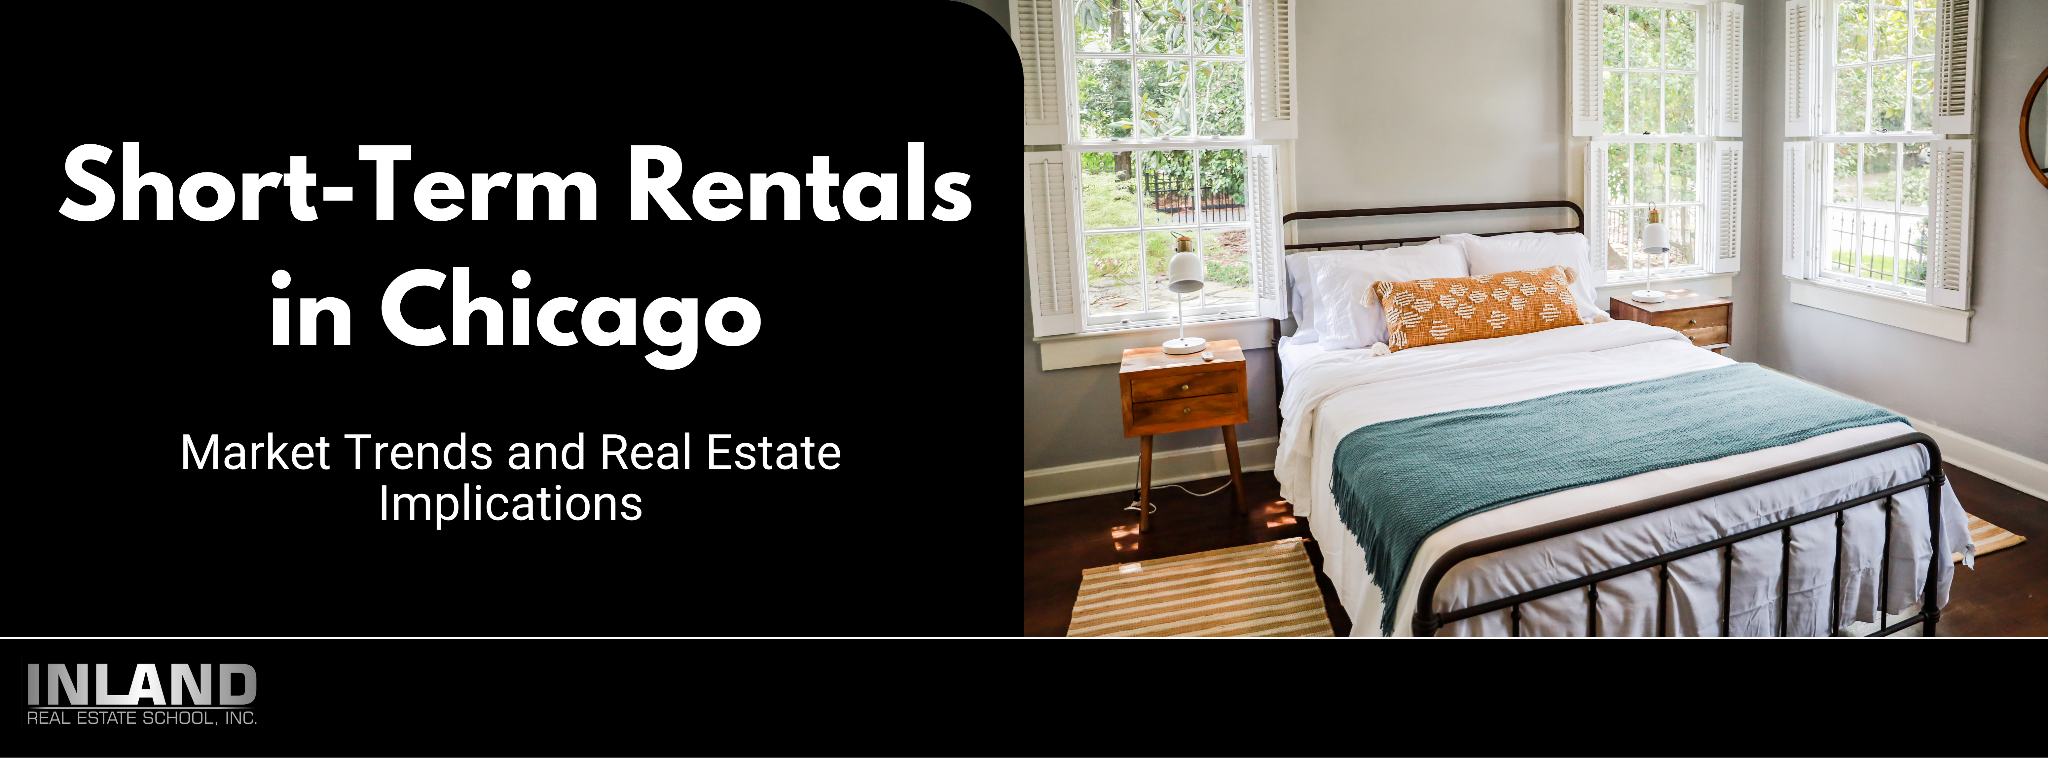 Market Trends in Chicago's Short-Term Rentals & Real Estate